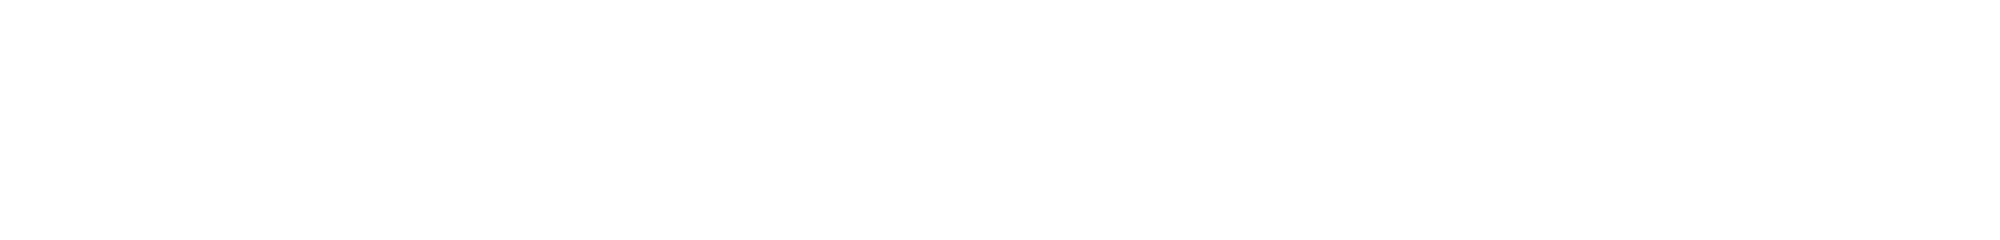 trees-smaller